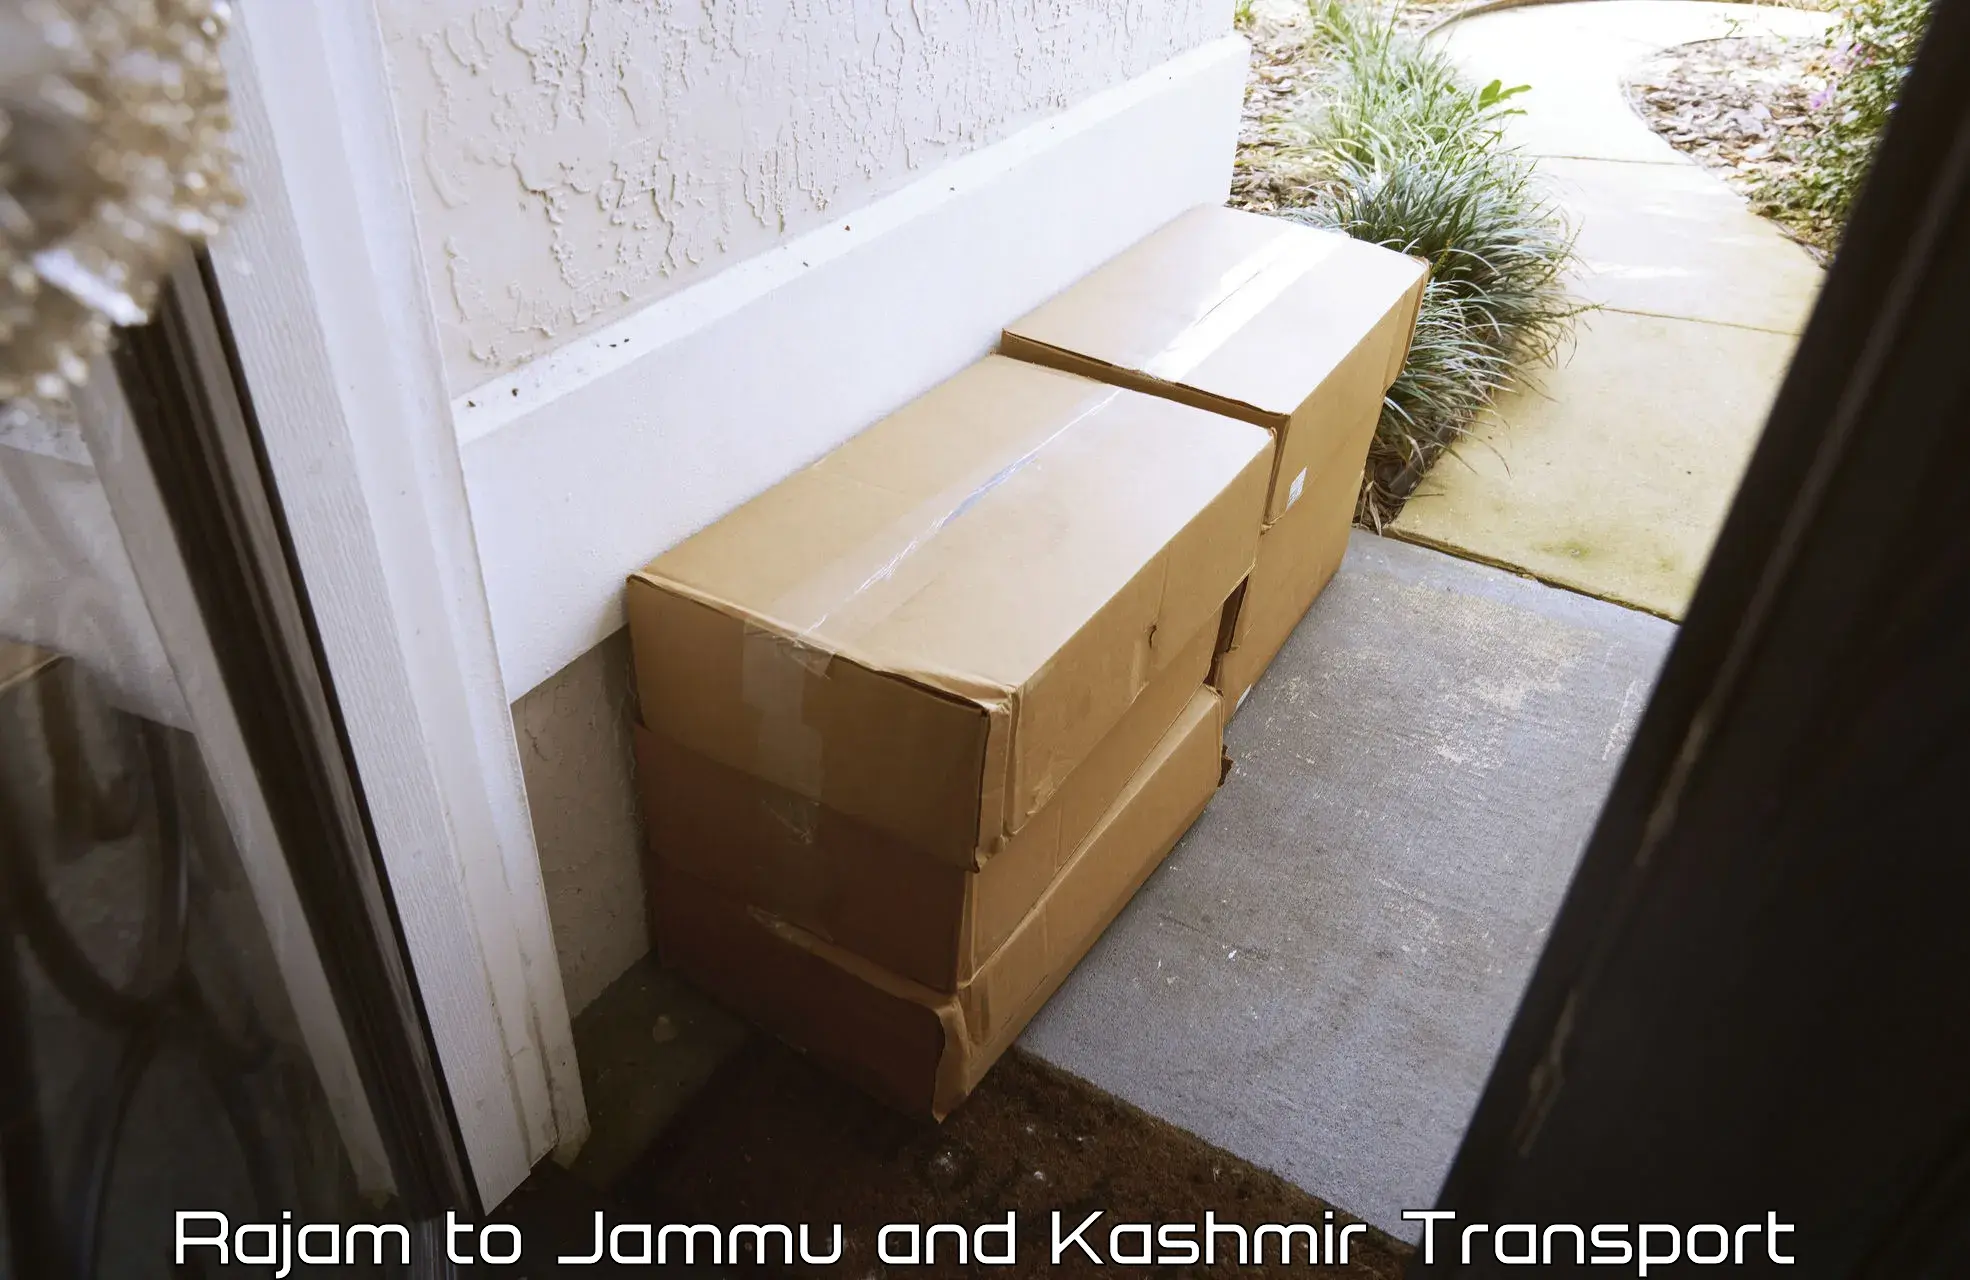 Daily parcel service transport Rajam to Leh